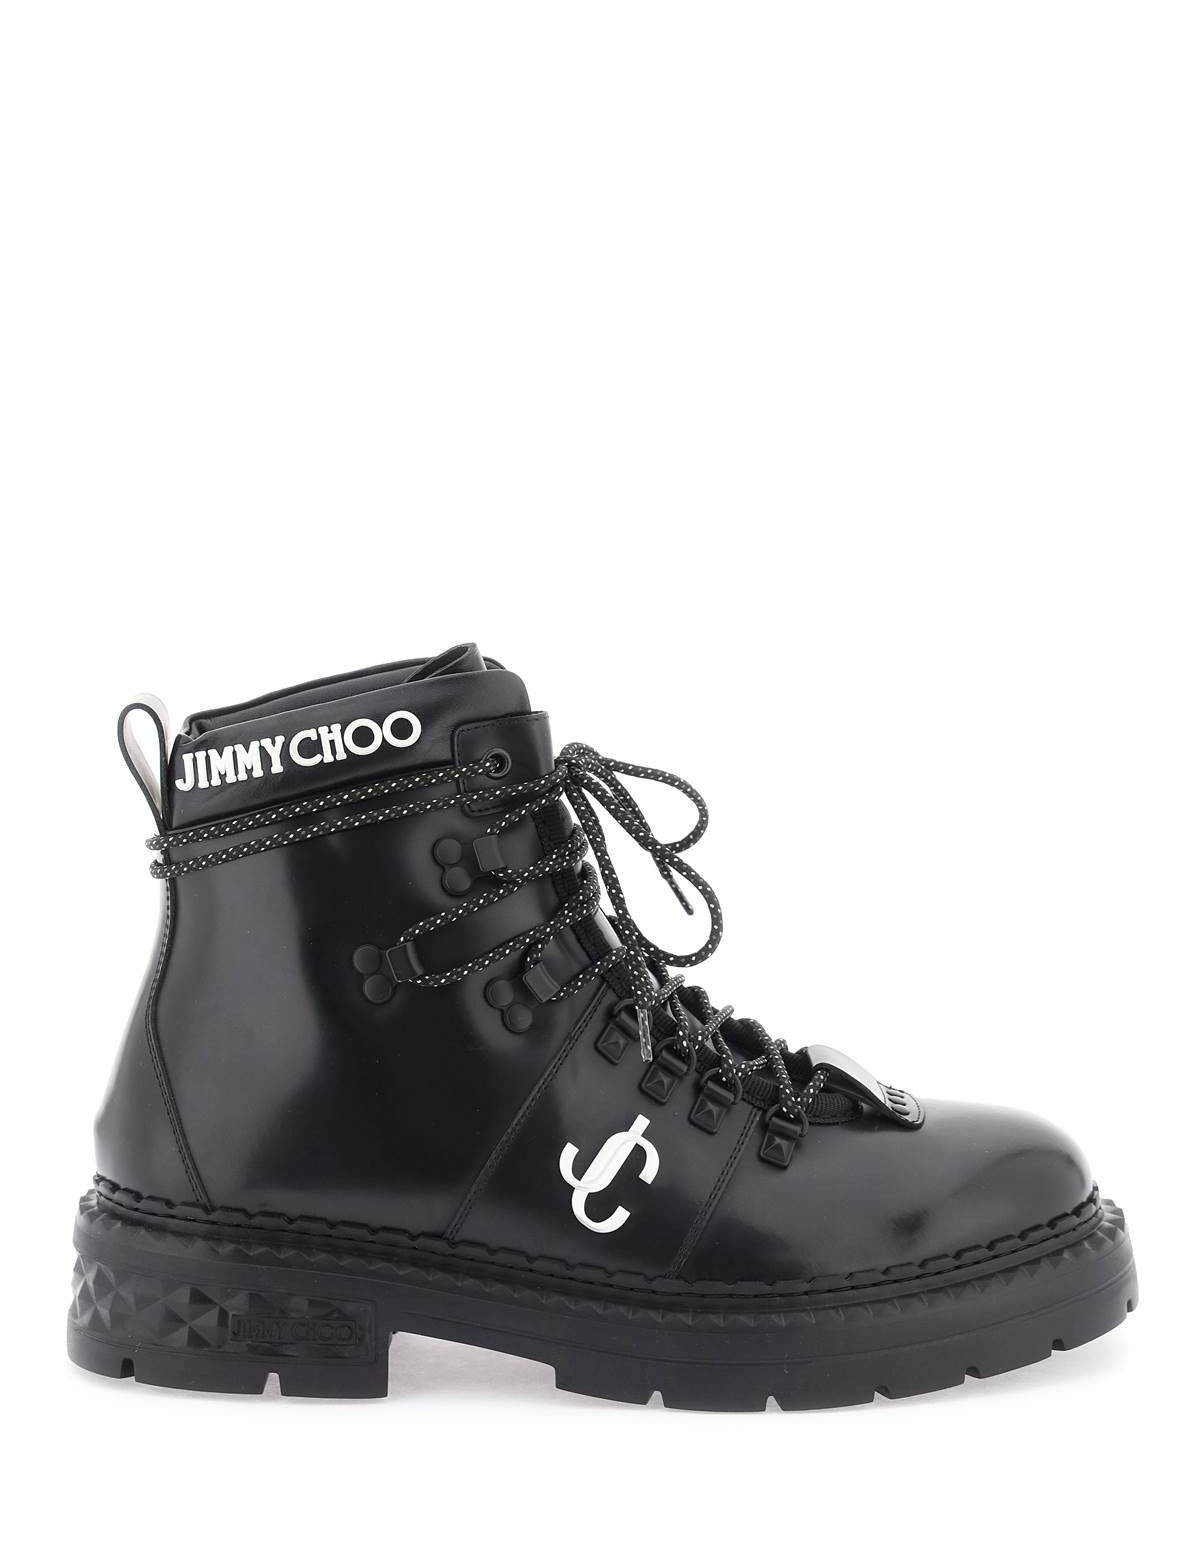 jimmy-choo-marlow-hiking-boots.jpg